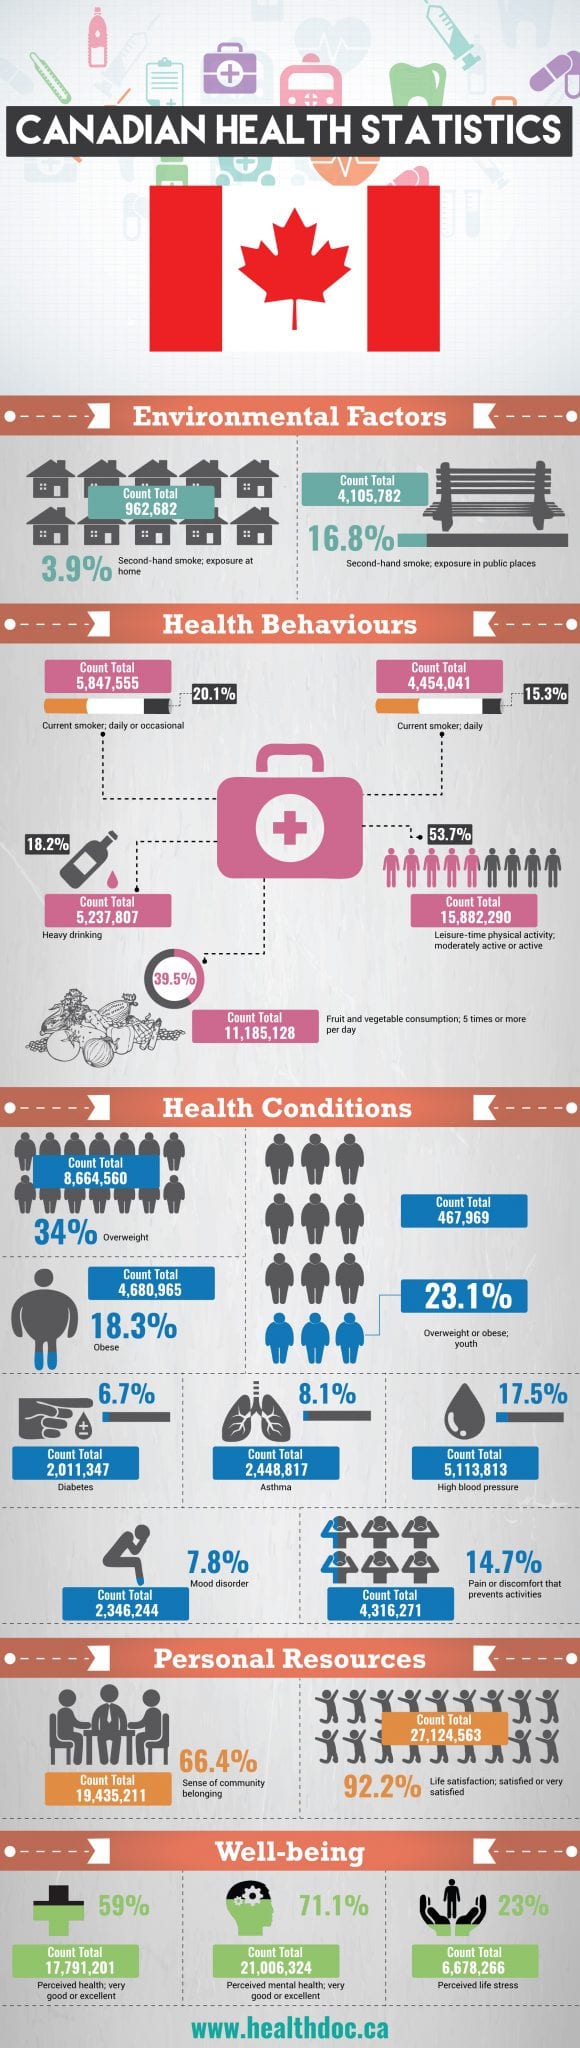 Canadian Health Statistics Infographic